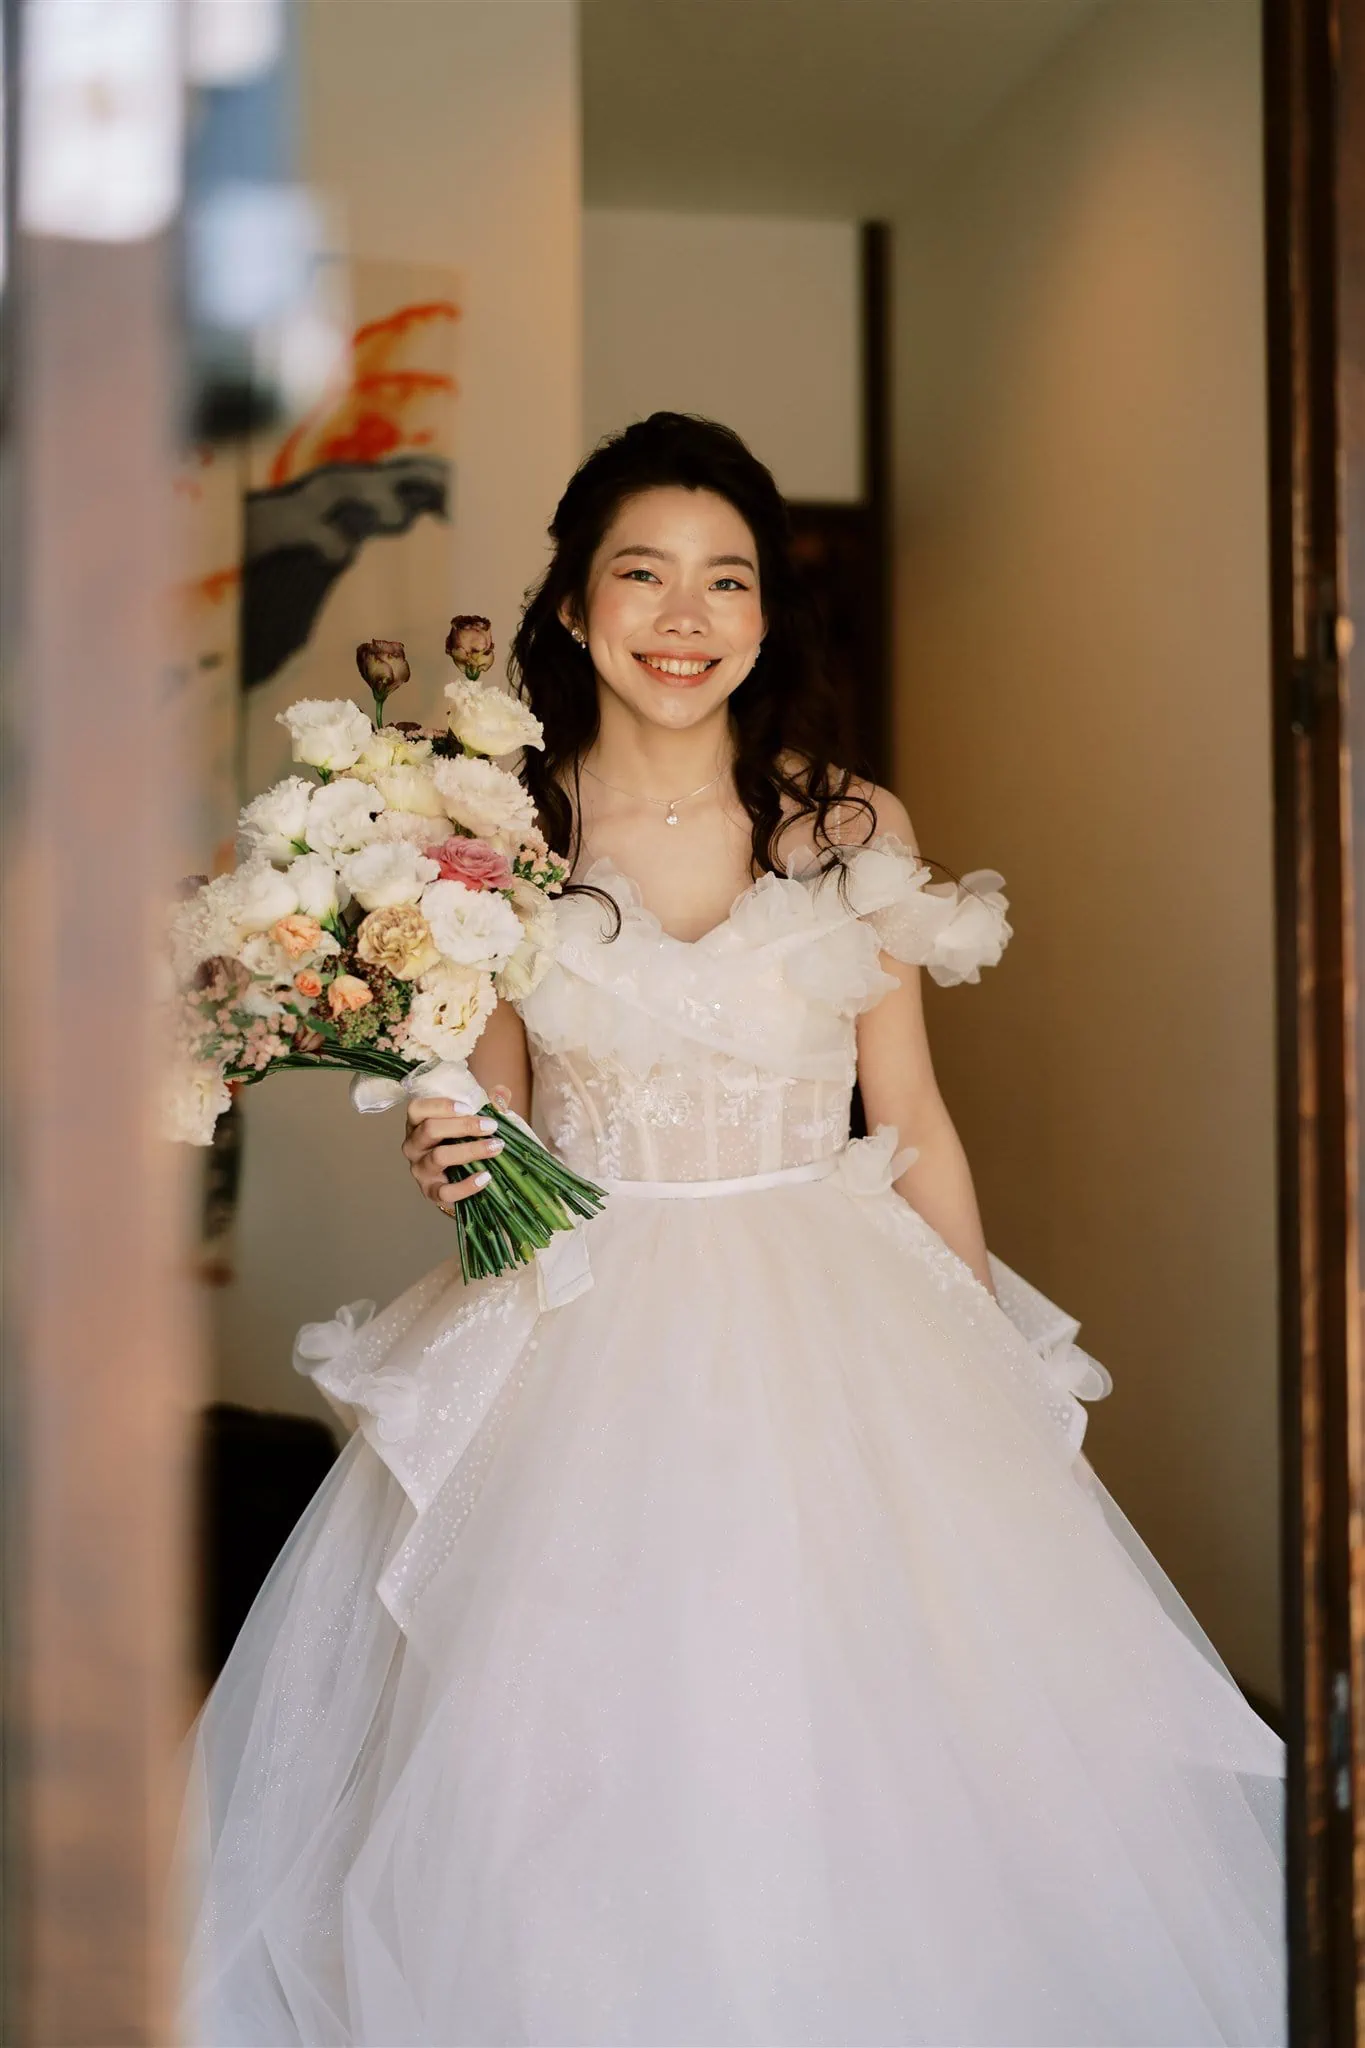 Kyoto Tokyo Japan Elopement Wedding Photographer, Planner & Videographer | A Japanese bride in a white wedding dress holding a bouquet, captured beautifully by an elopement photographer.